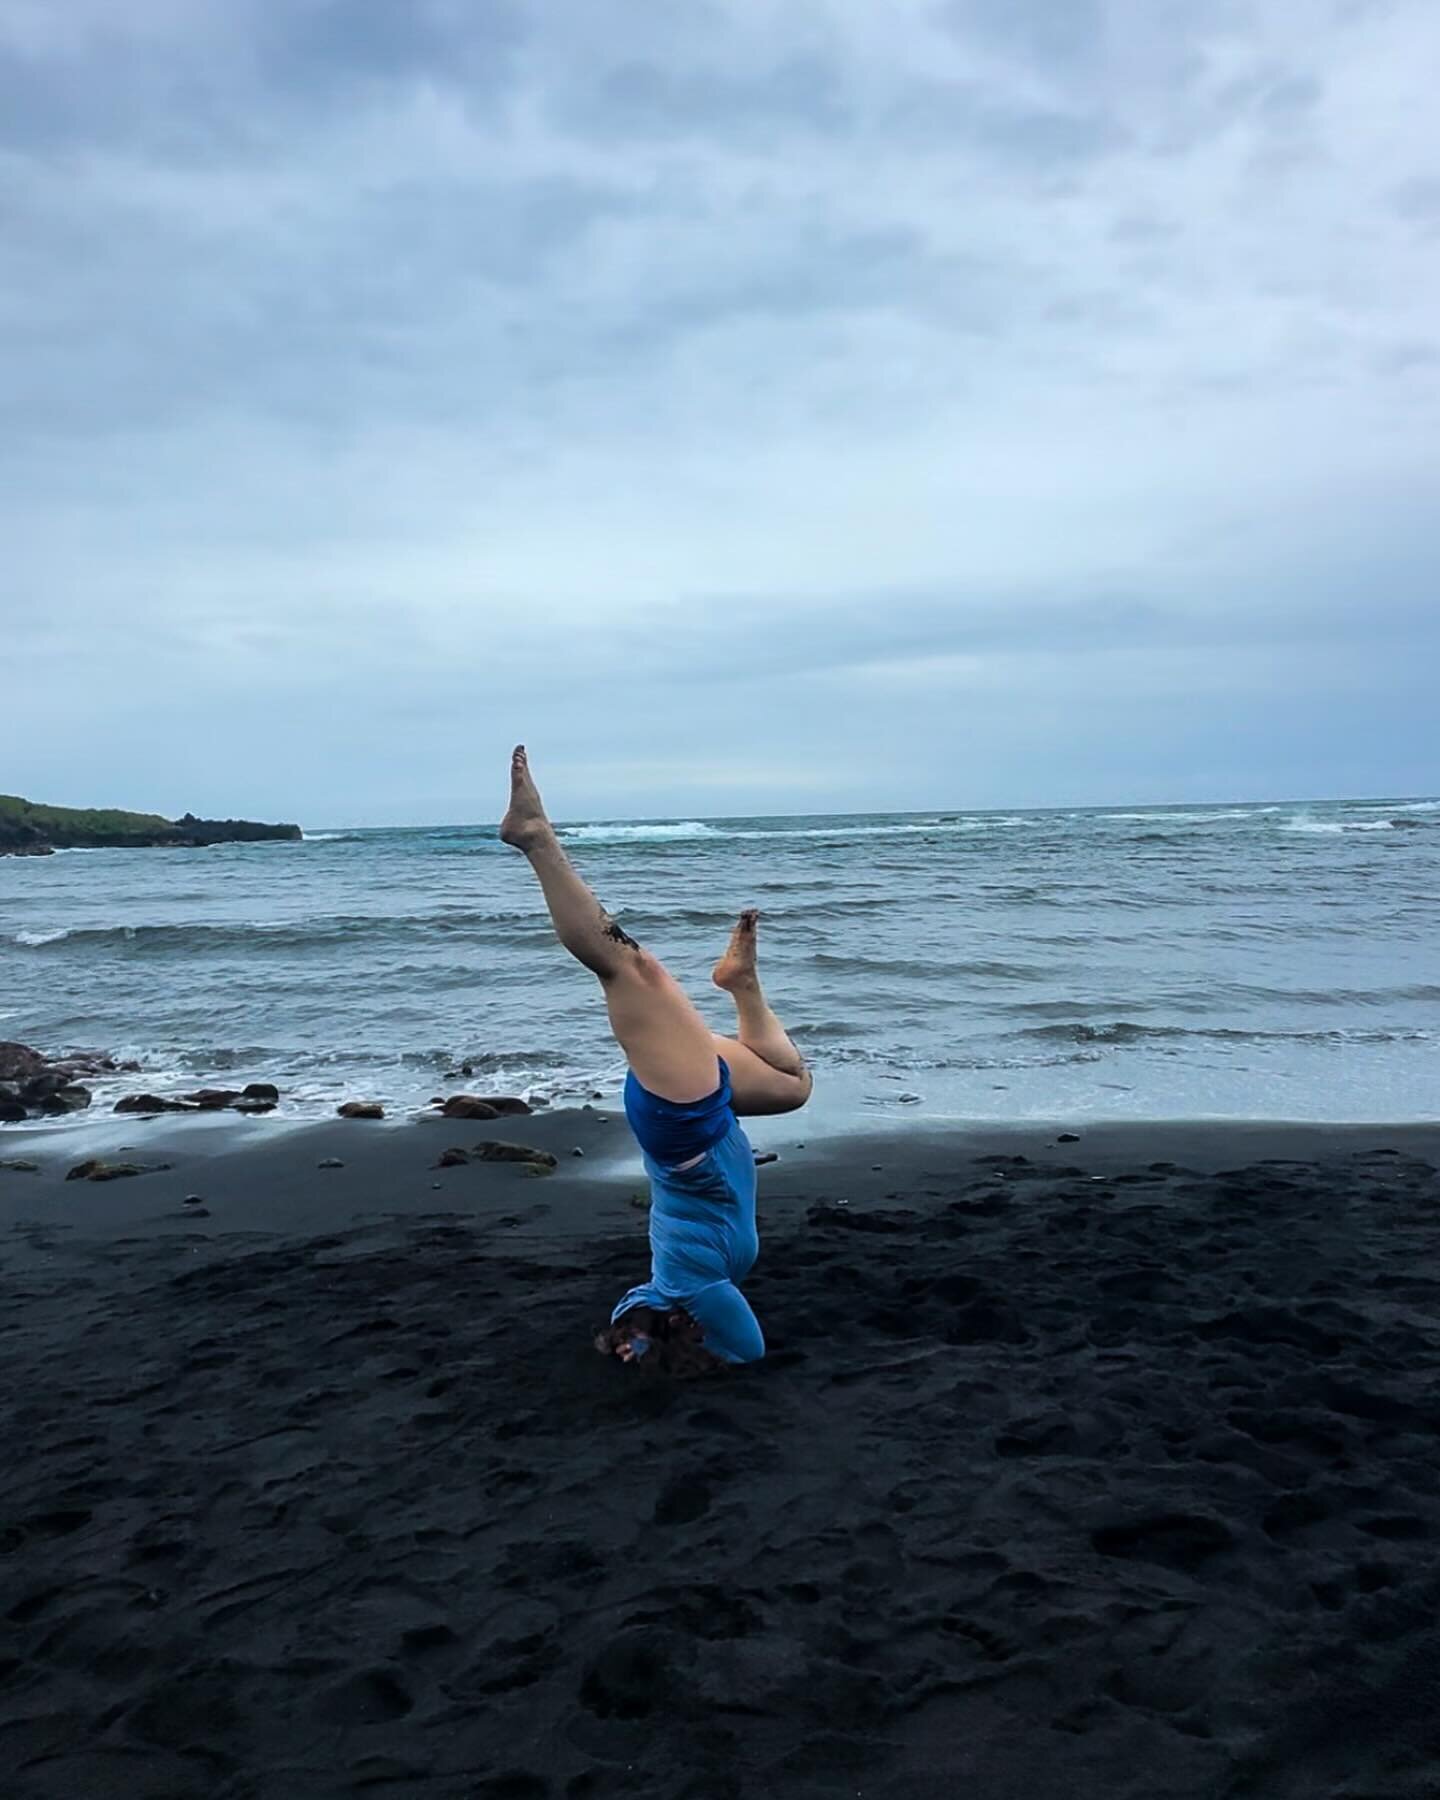 Punaluʻu Beach (black sand beach) where I finally saw the Hawaiian Turtle! And my second black sand beach besides Iceland!

#blacksand #blacksandbeach #headstand #yogainspiration #yogagram #headstandpractice #headstands #headstandpose #yogaeverywhere